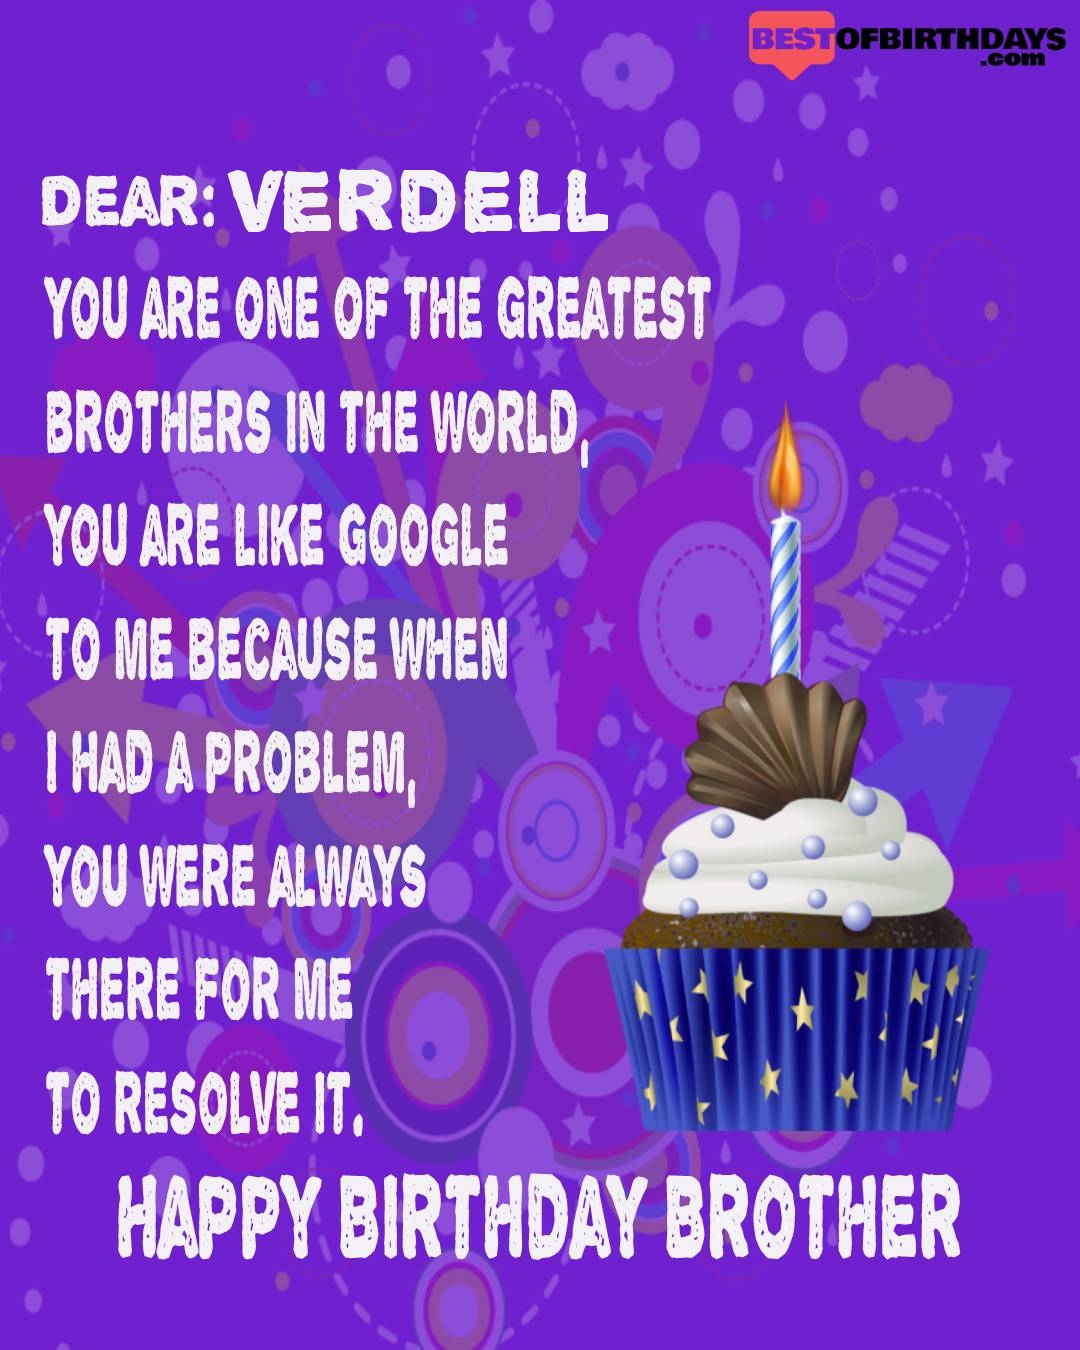 Happy birthday verdell bhai brother bro